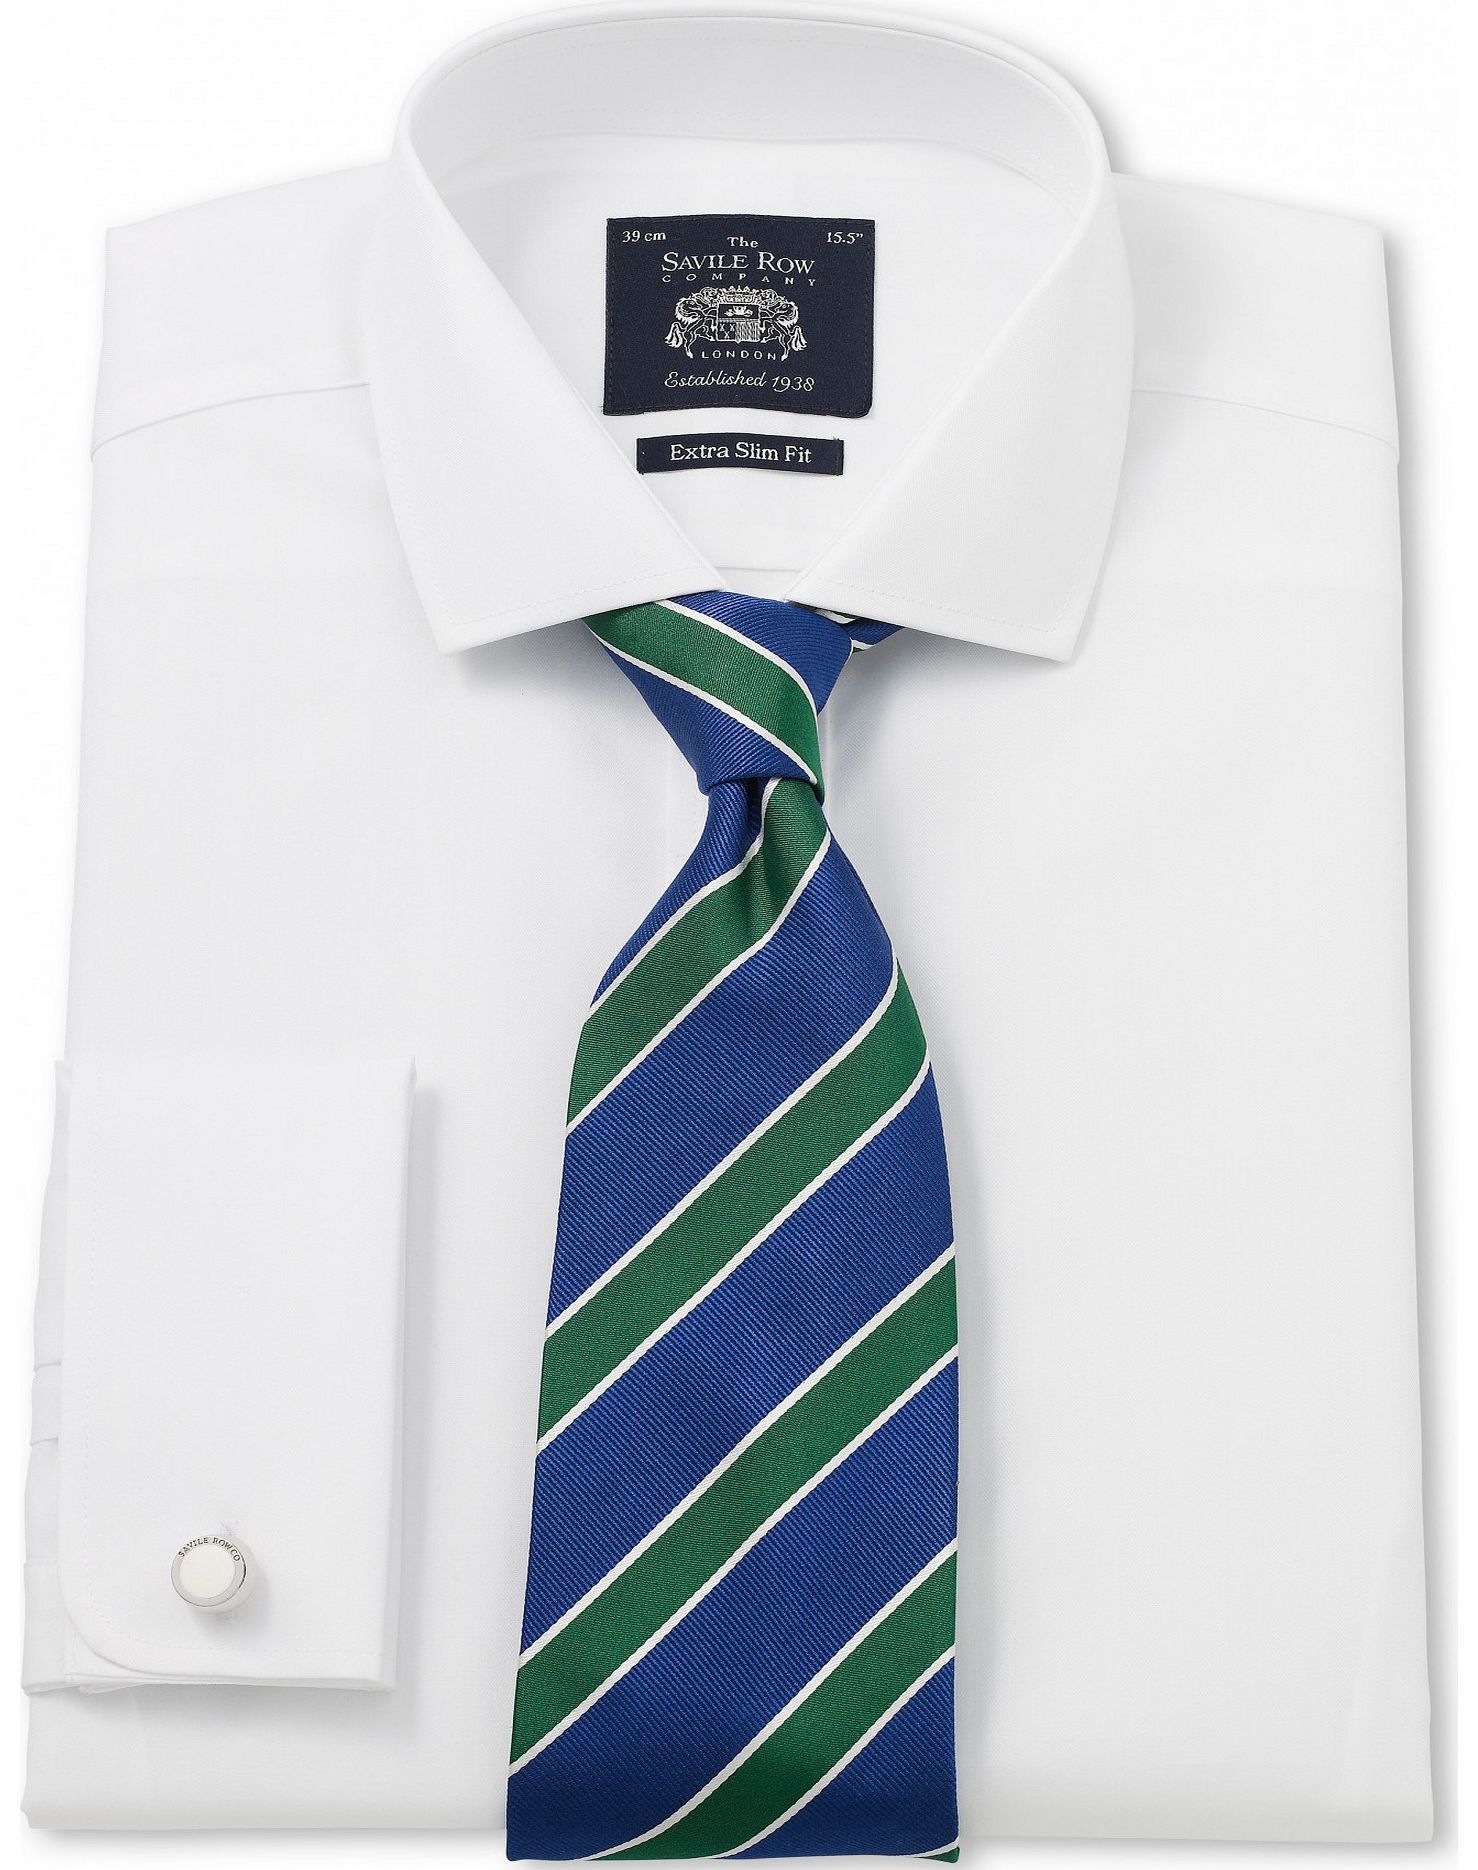 Savile Row Company White Luxury Herringbone Extra Slim Fit Shirt 17